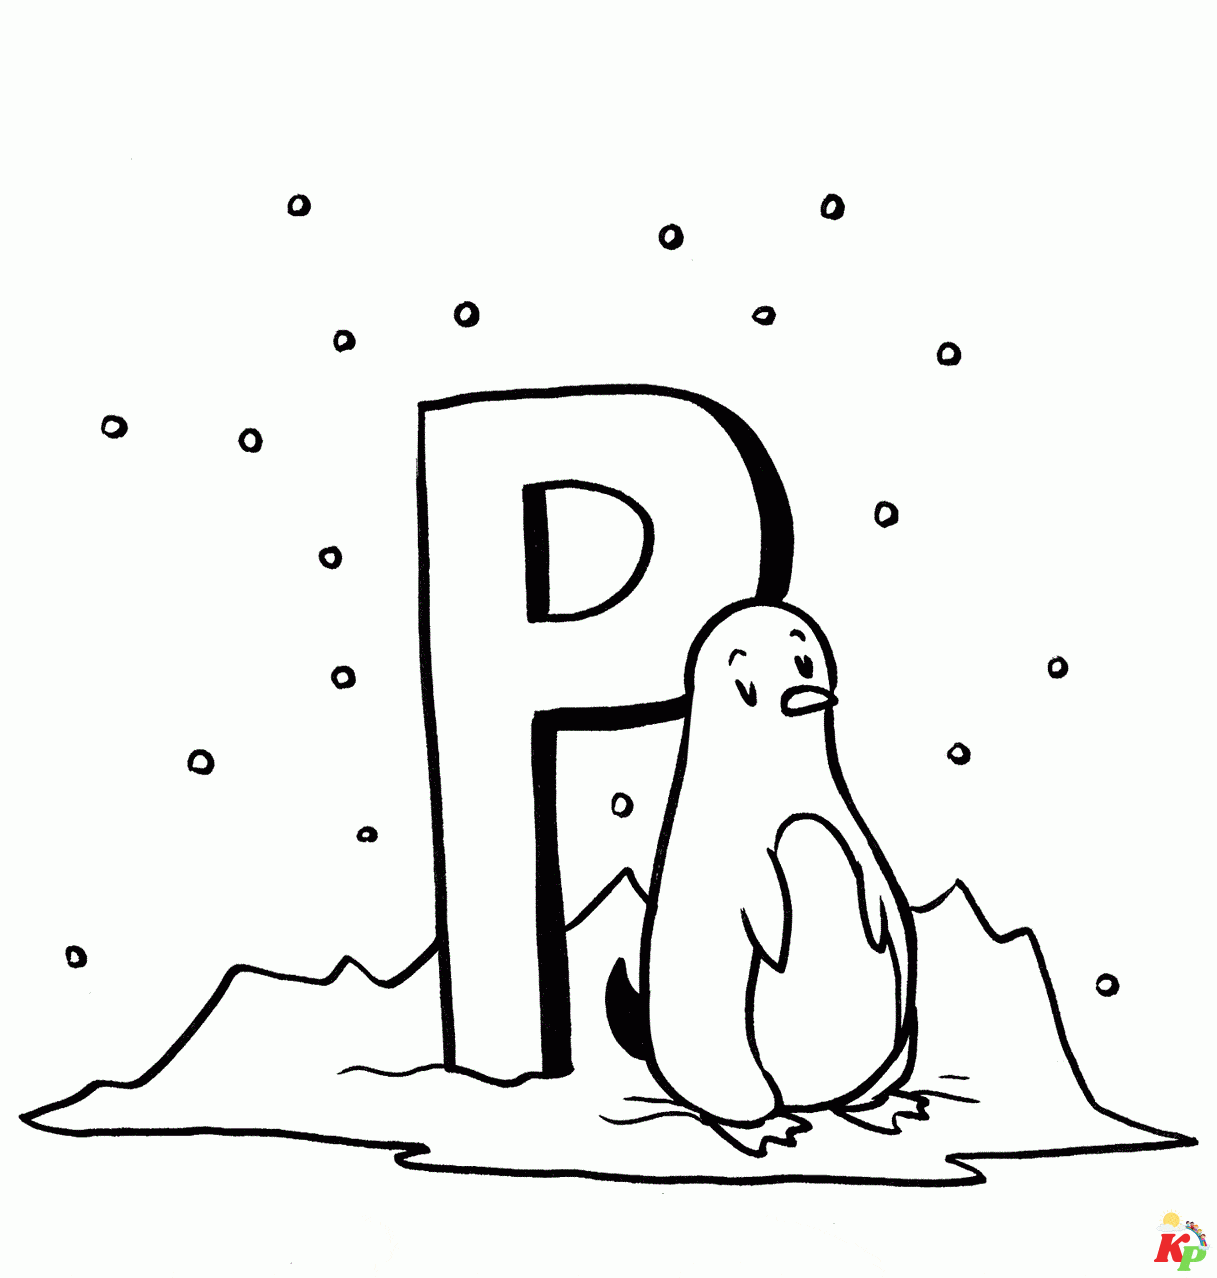 Pinguins07